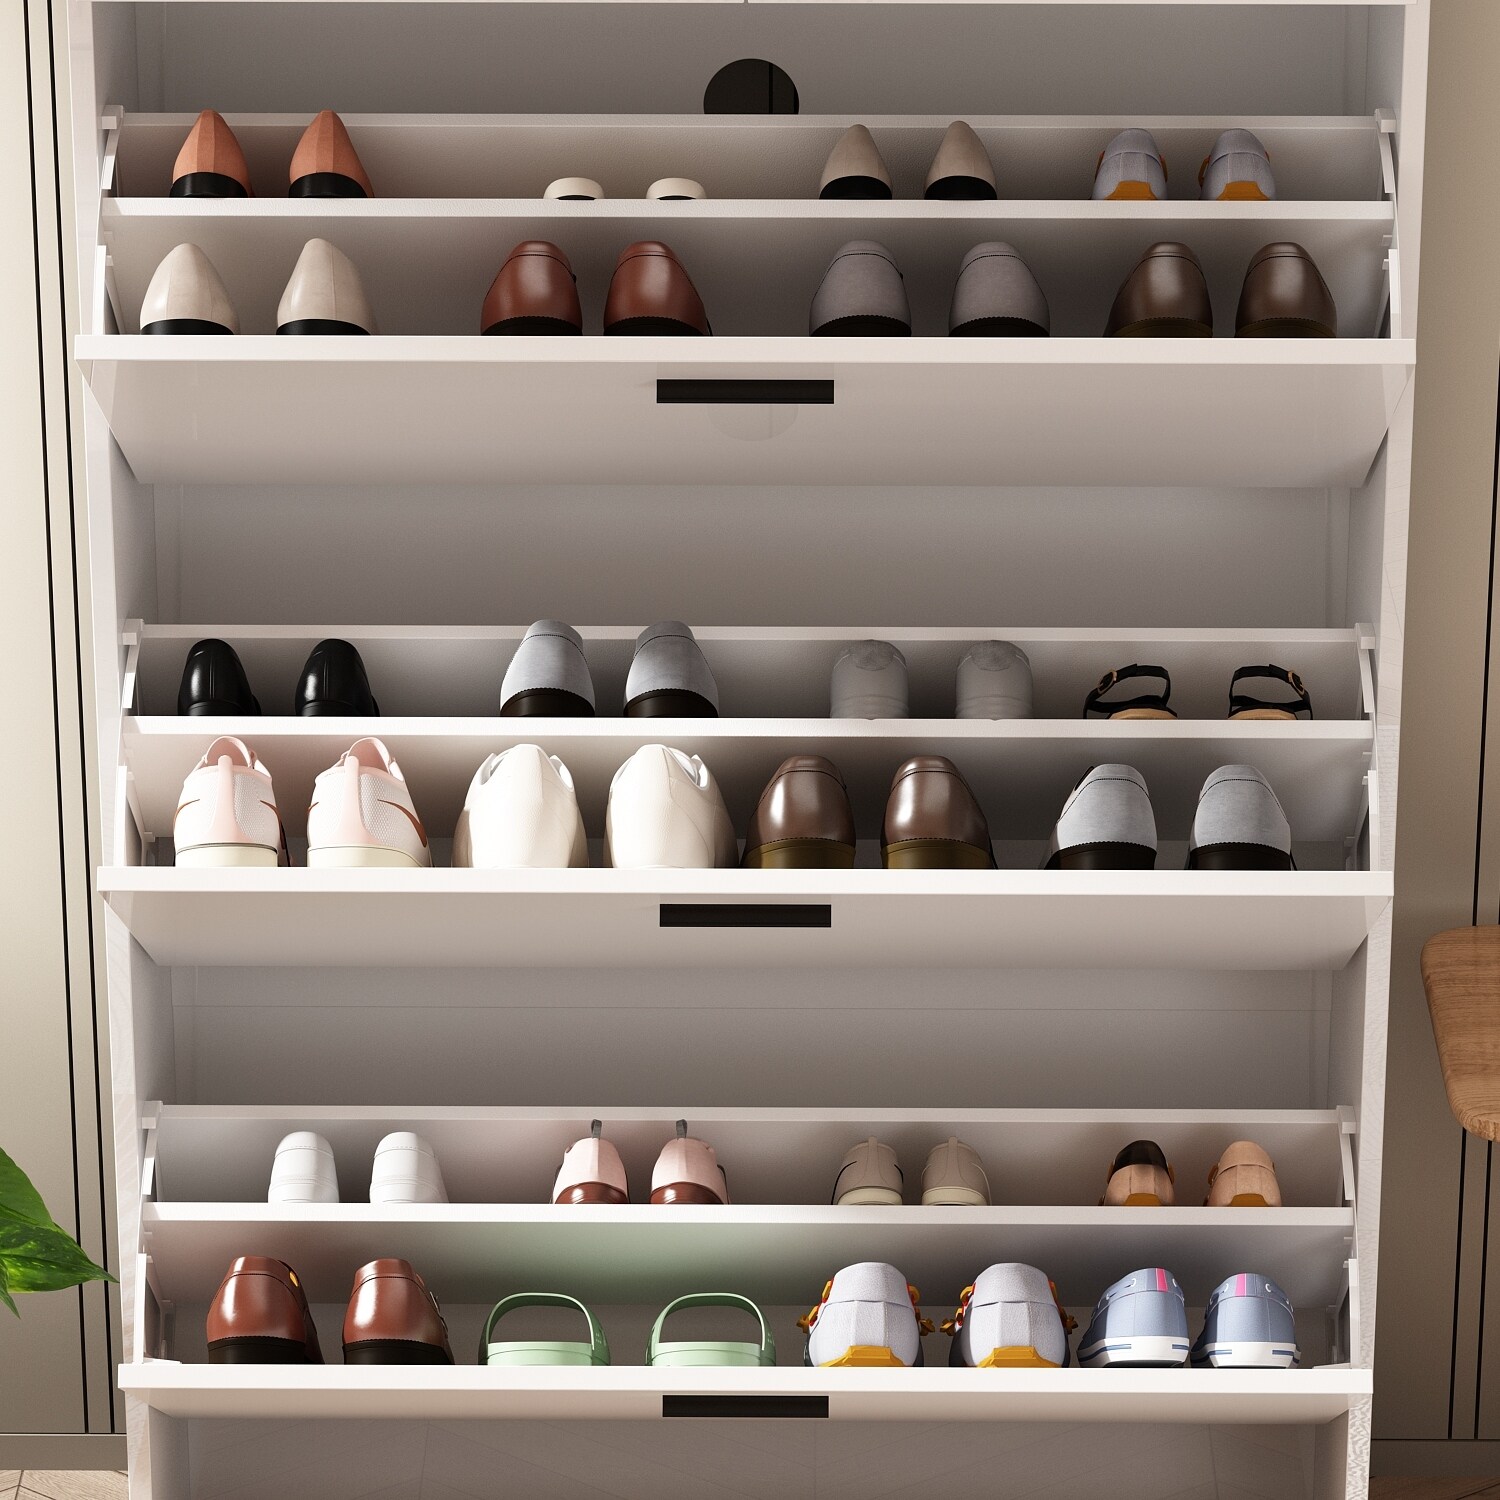 Modern Shoe Storage Cabinet with 5 Drawer Shoe Rack Storage Organizer - White